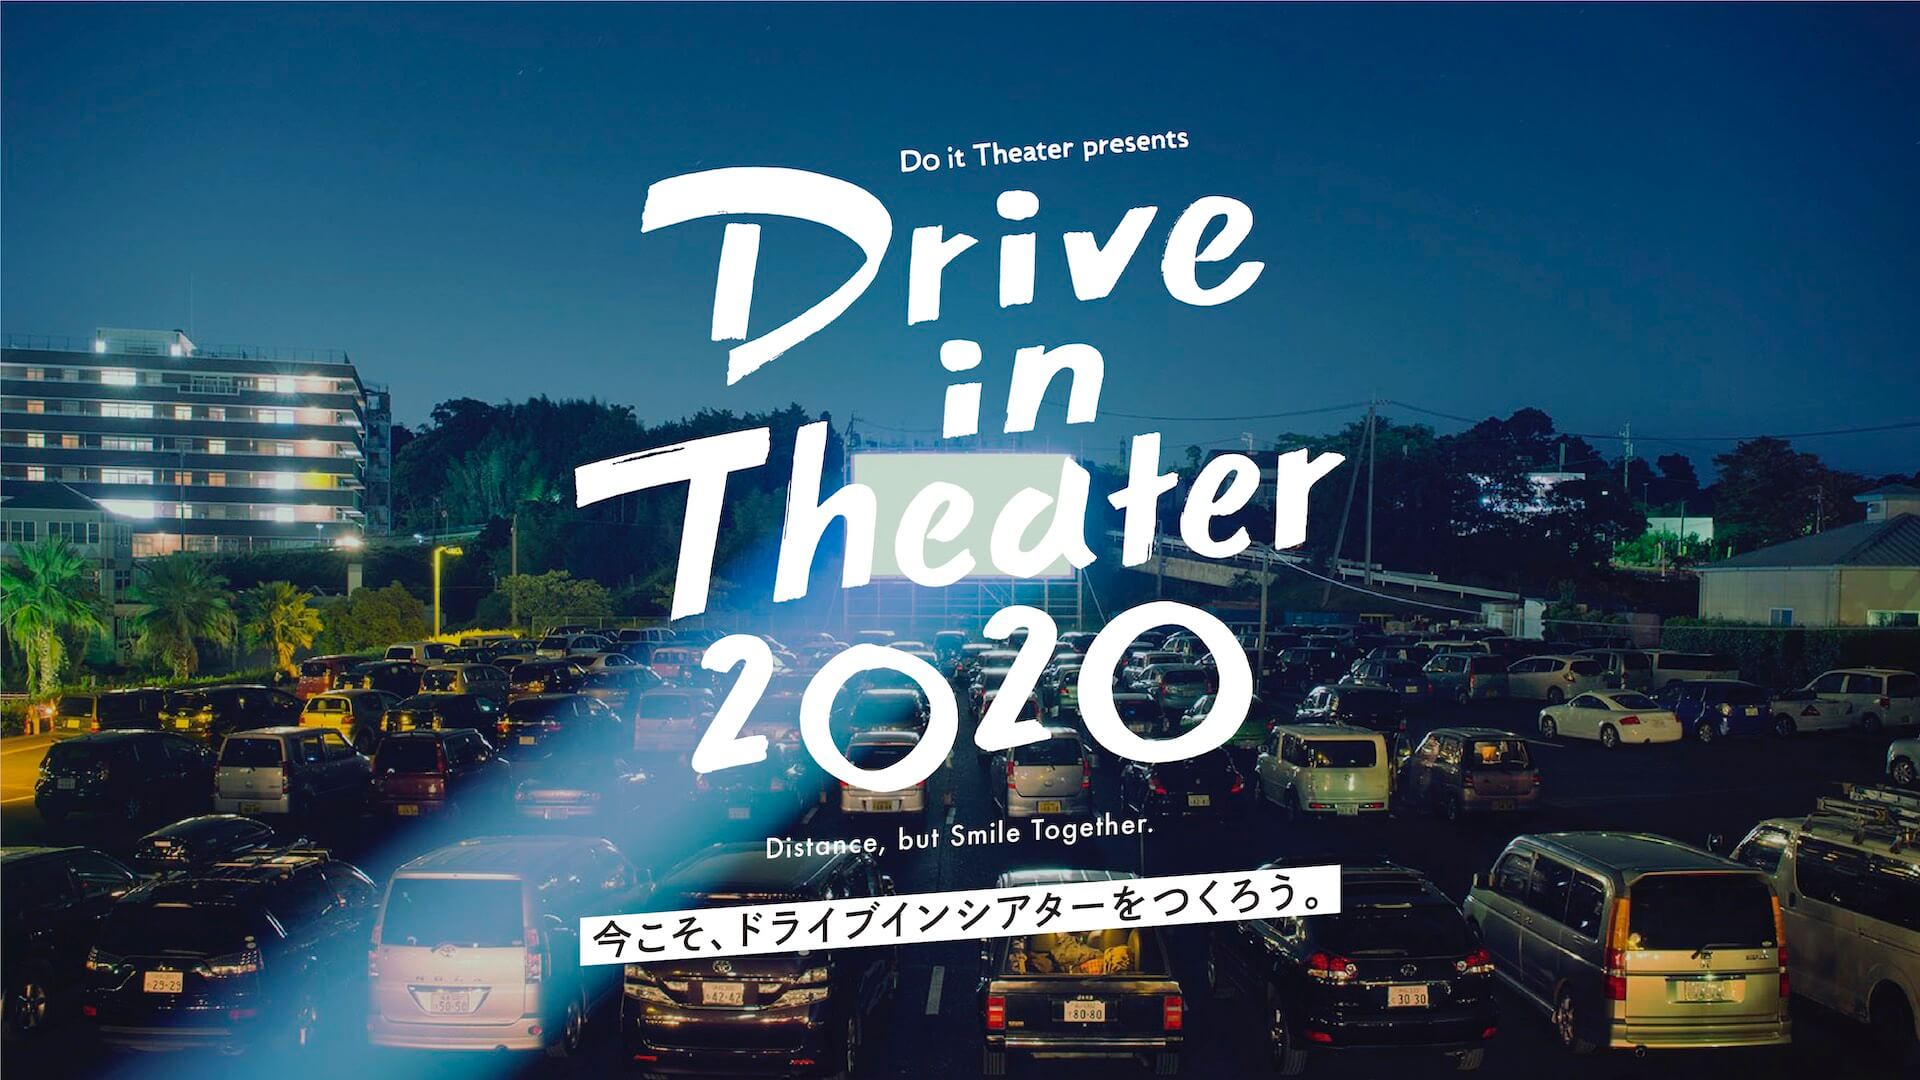 Do it Theaterがドライブシアター実現と映画支援を目指す「Drive in Theater 2020」をMOTION GALLERYにて公開 film200413_driveintheater_01